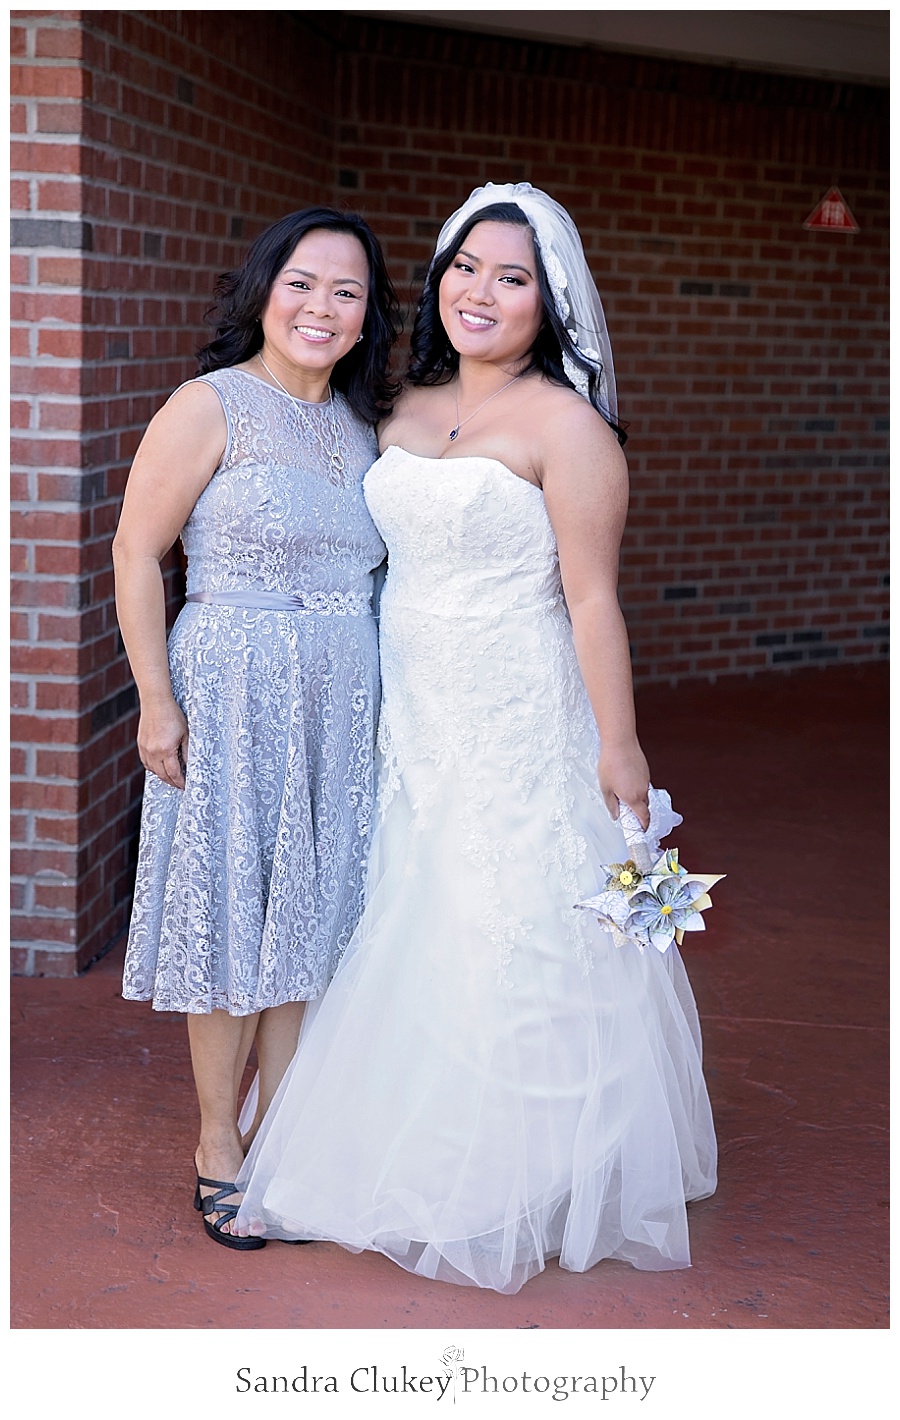 Stunning bride with Mom